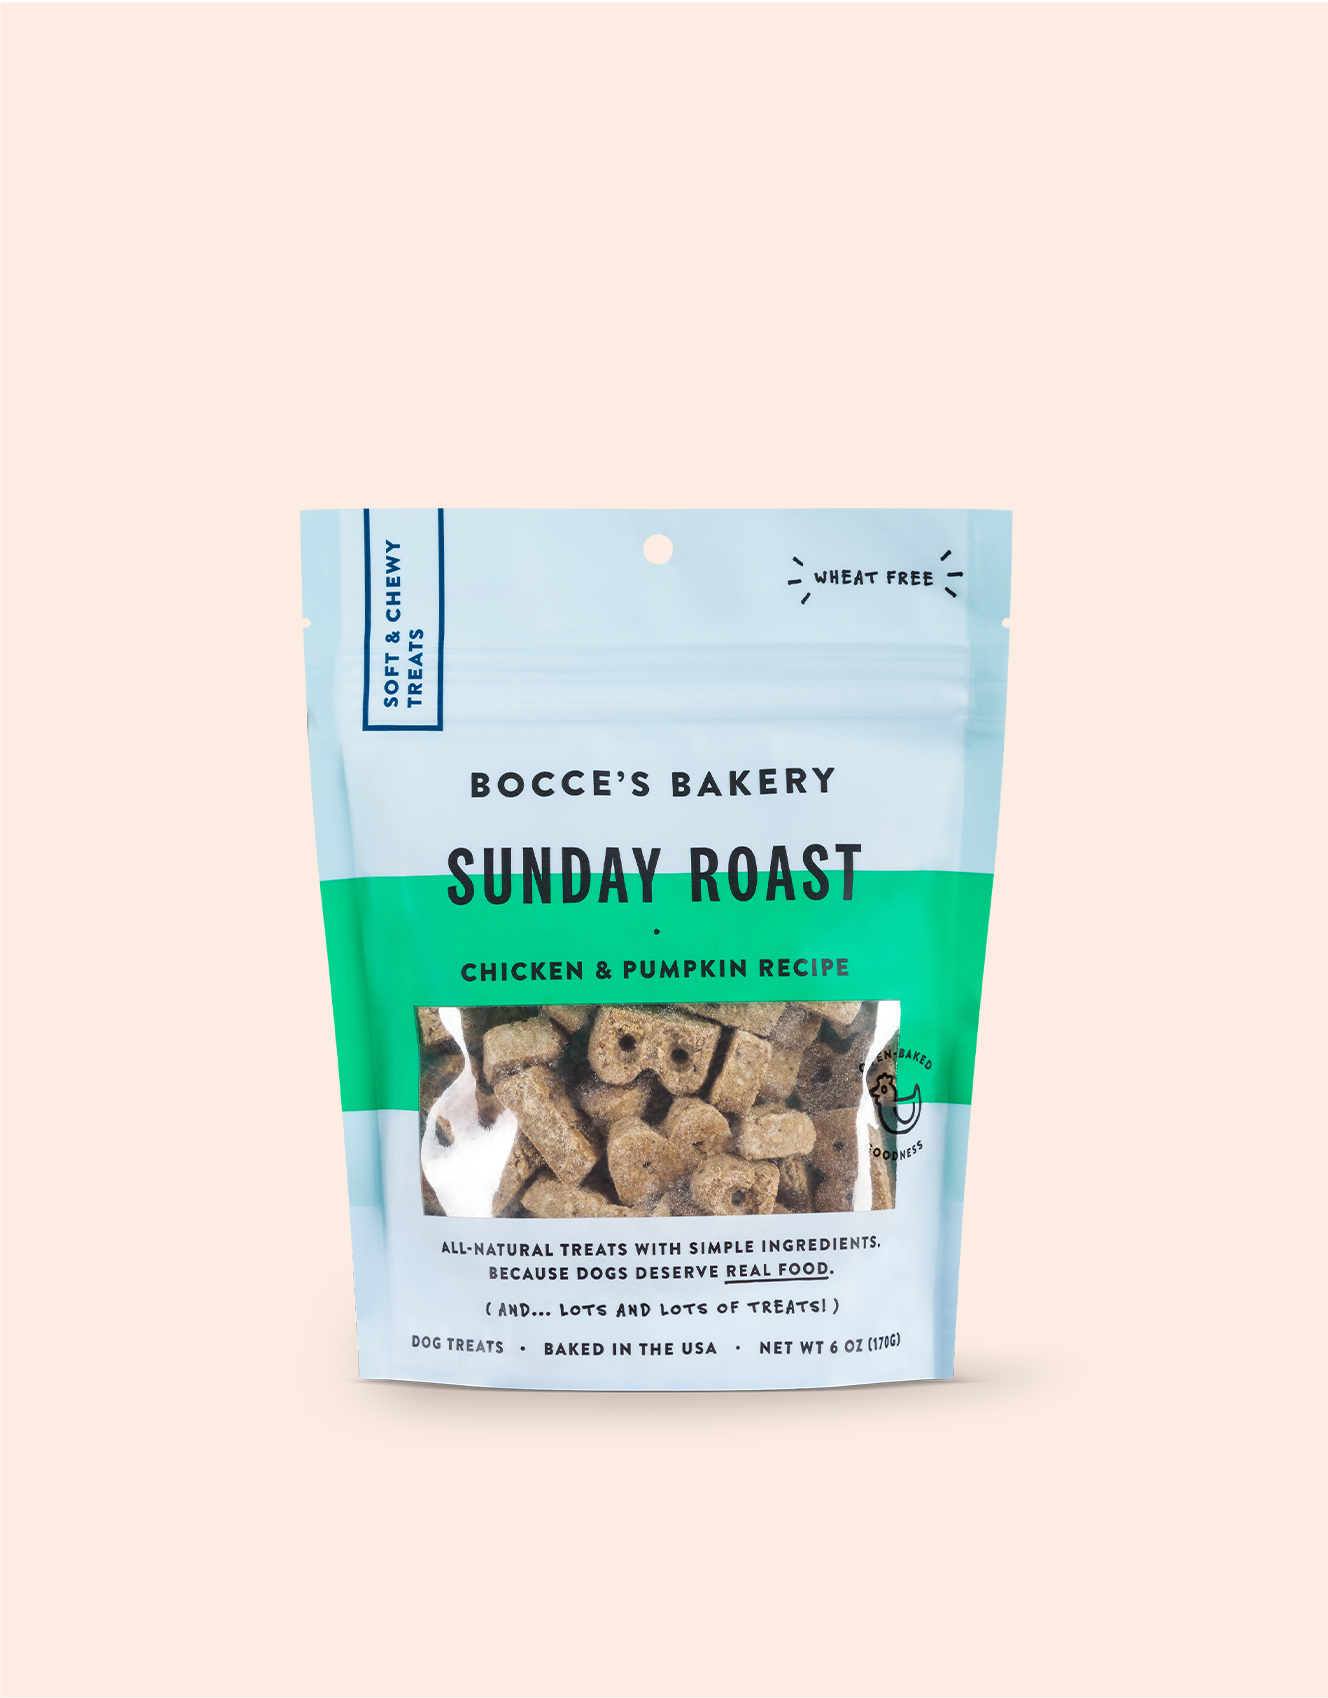 Sunday Roast Soft & Chewy Treats